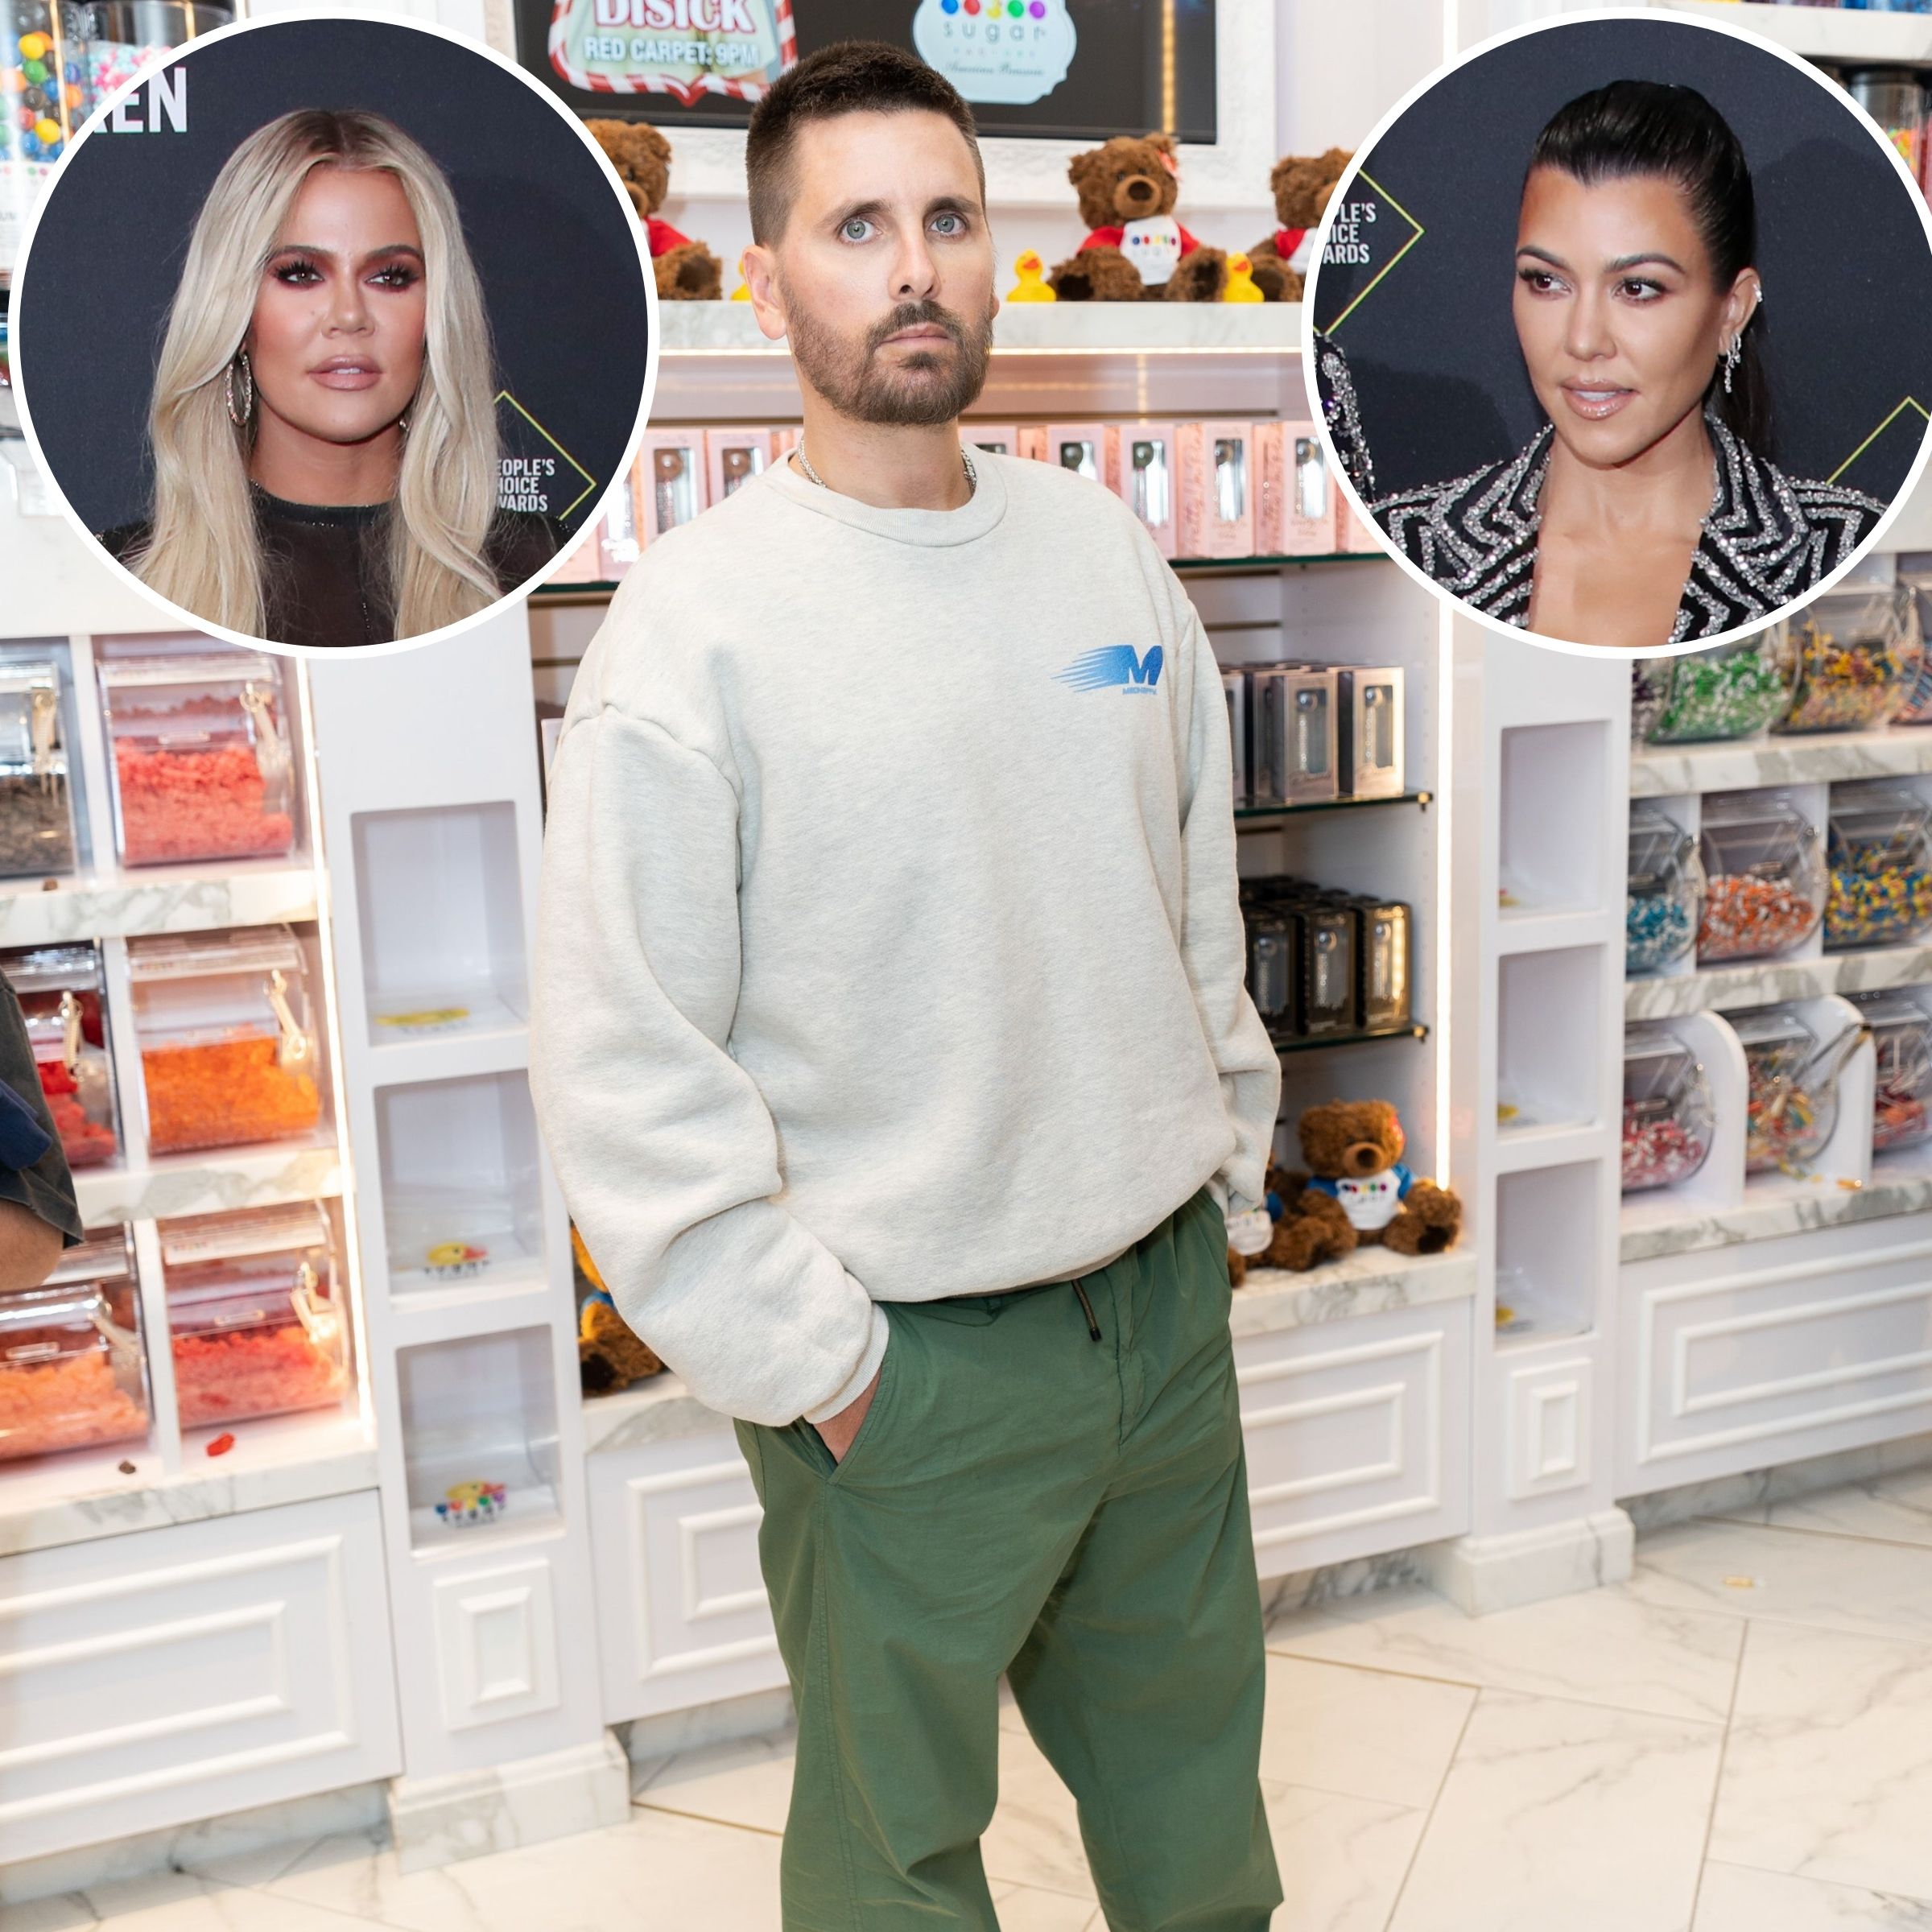 Why Did Scott Disick Unfollow Kardashians-Jenners?